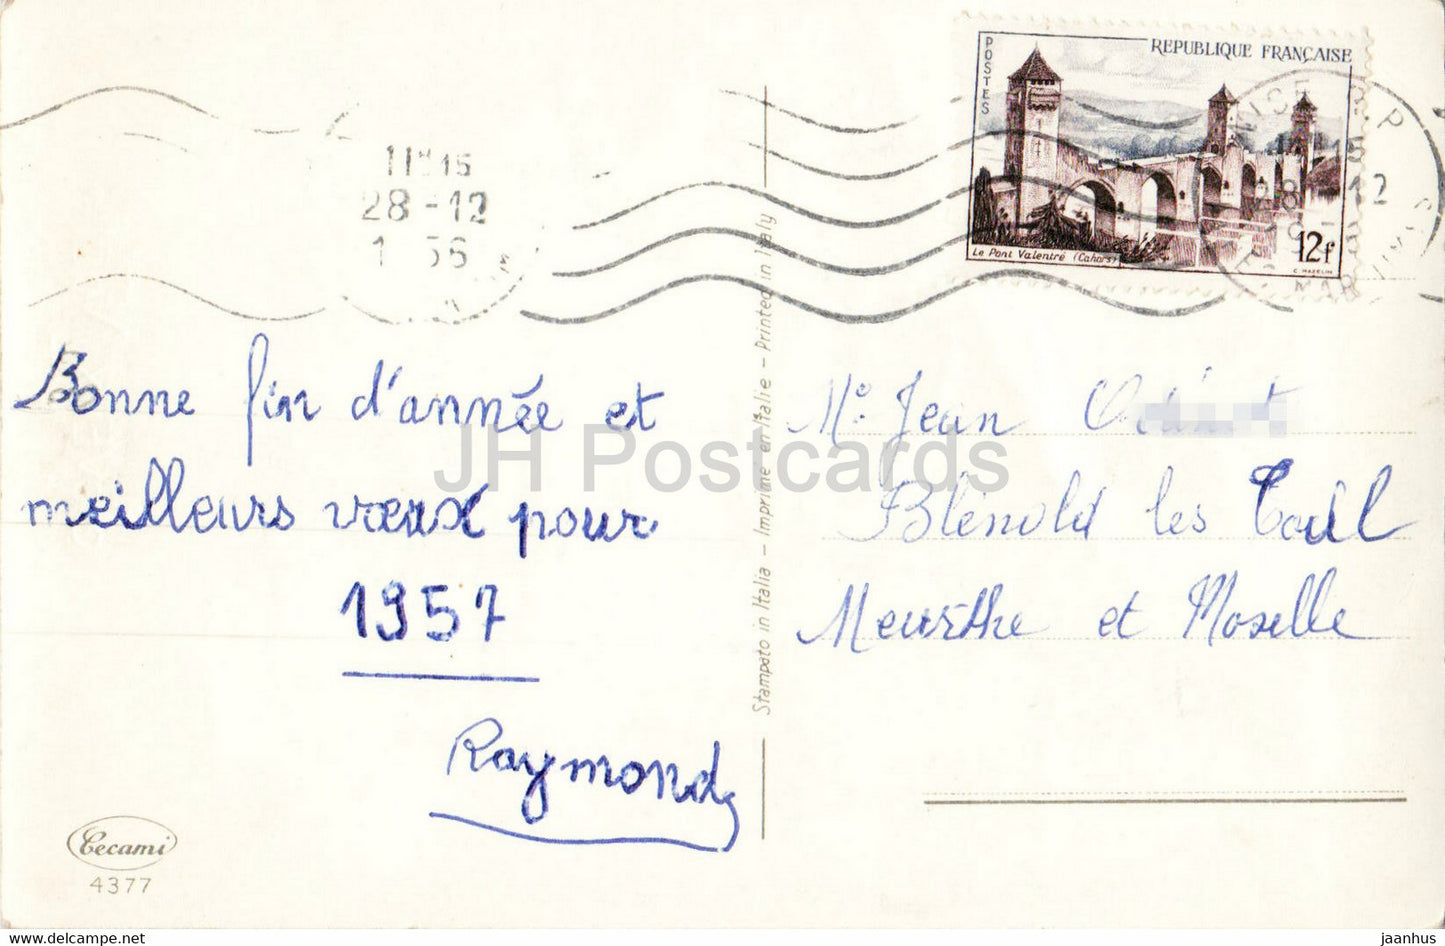 New Year Greeting Card - Joyeux Noel - bells - illustration - Cecami 4377 - old postcard - 1956 - France - used